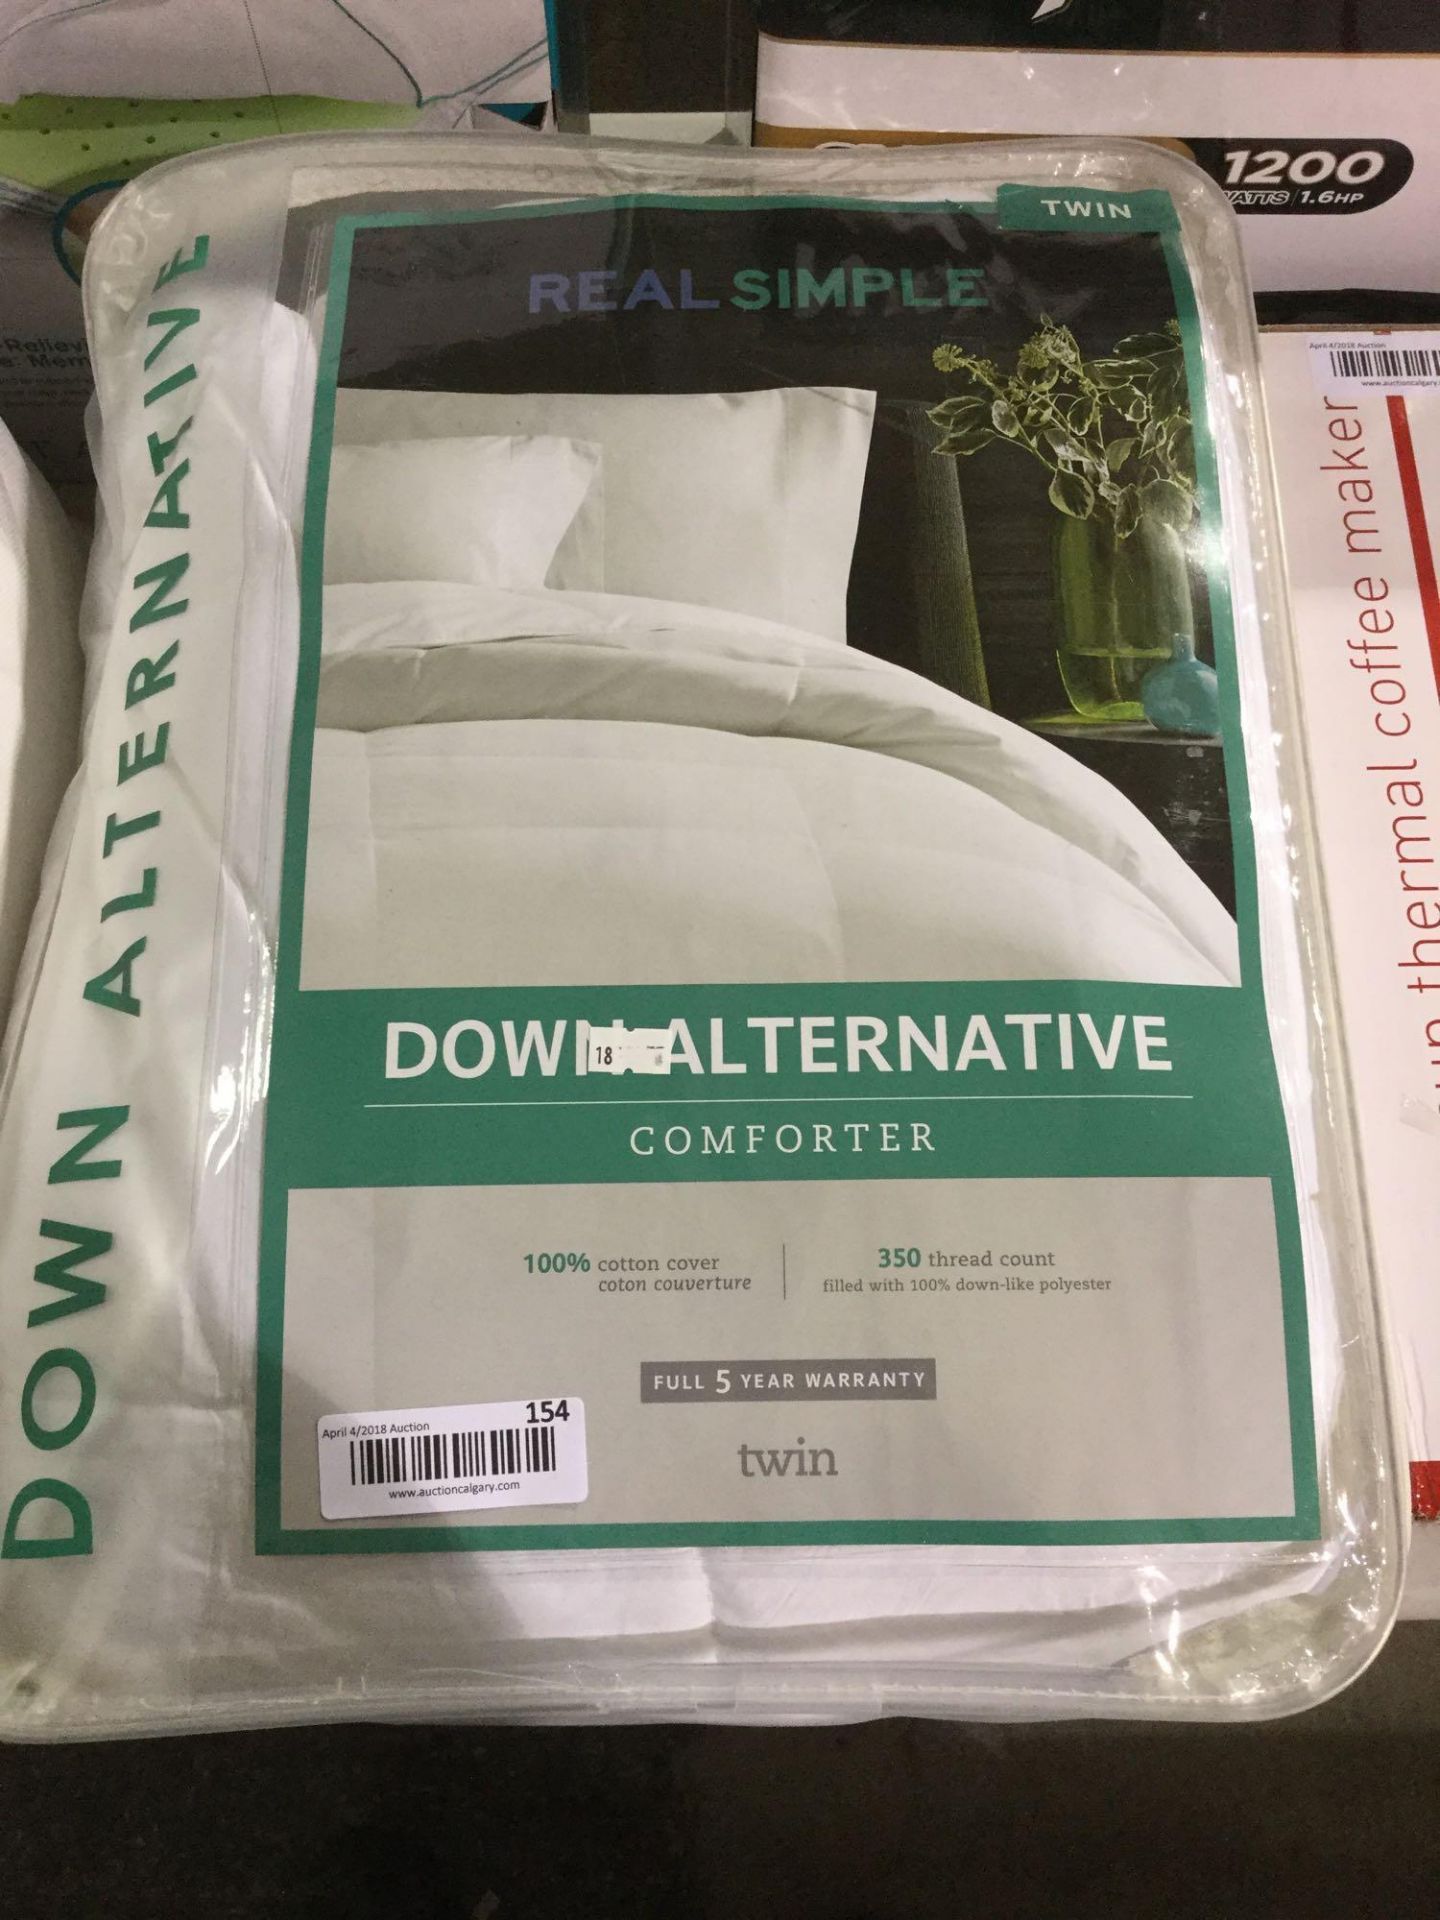 Real Simple - Twin Down alternative Duvet